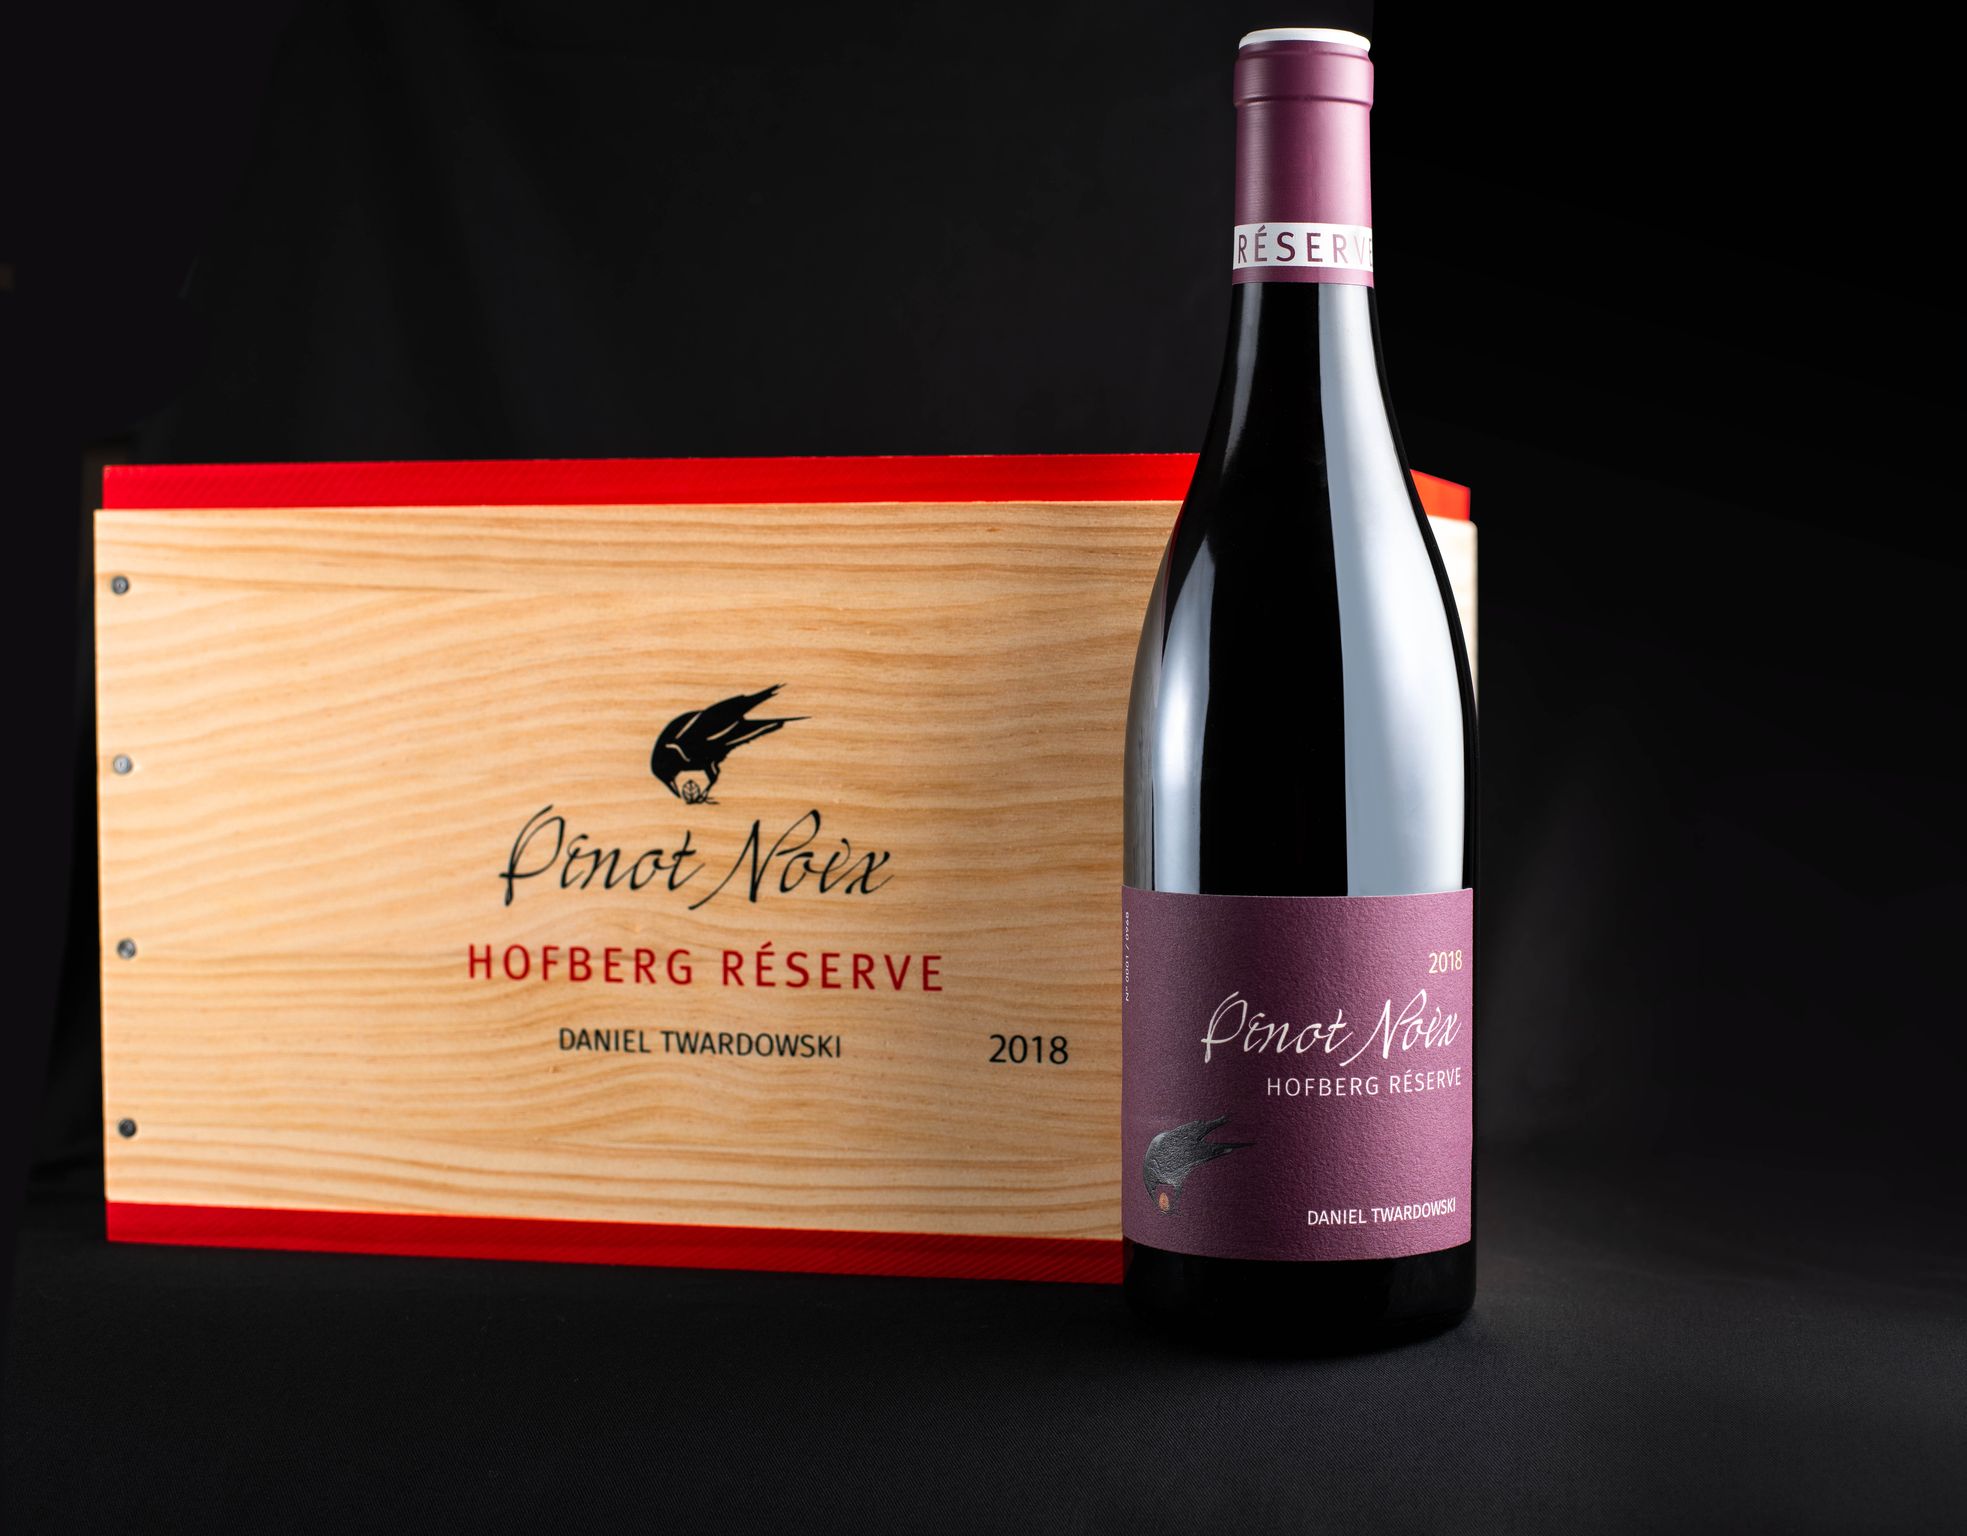 Pinot Noix 'HOFBERG' RSERVE Sptburgunder Q.b.A. trocken 2019 Daniel Twardowski OWC 6 bottles Case 4500ml